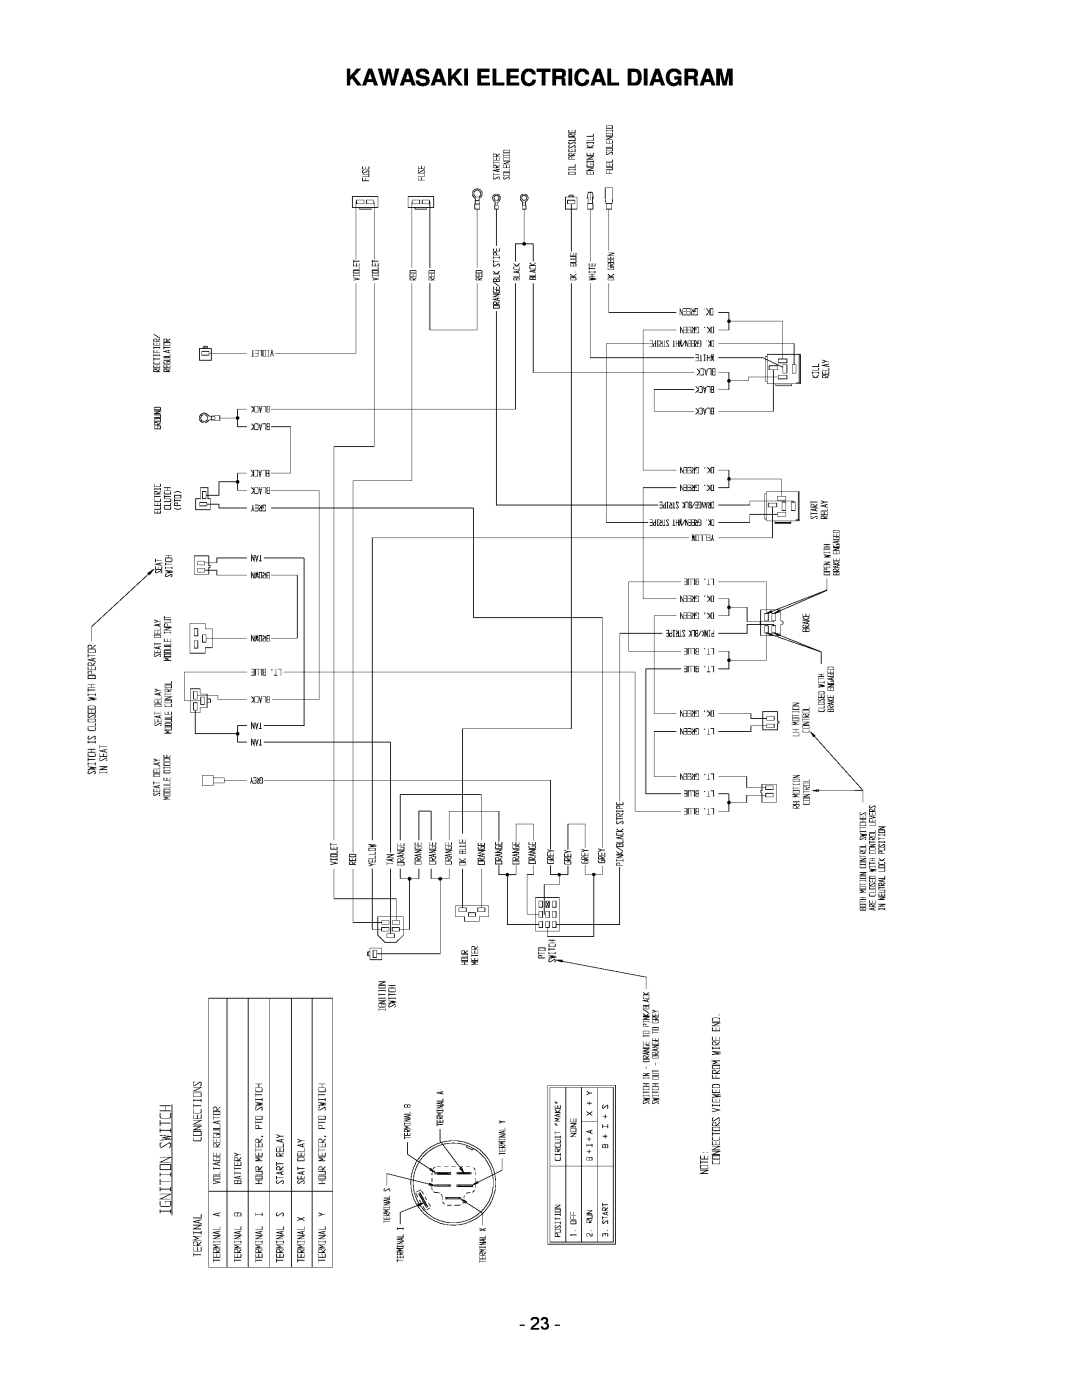 Exmark 465, 505, 565 manual Kawasaki Electrical Diagram 